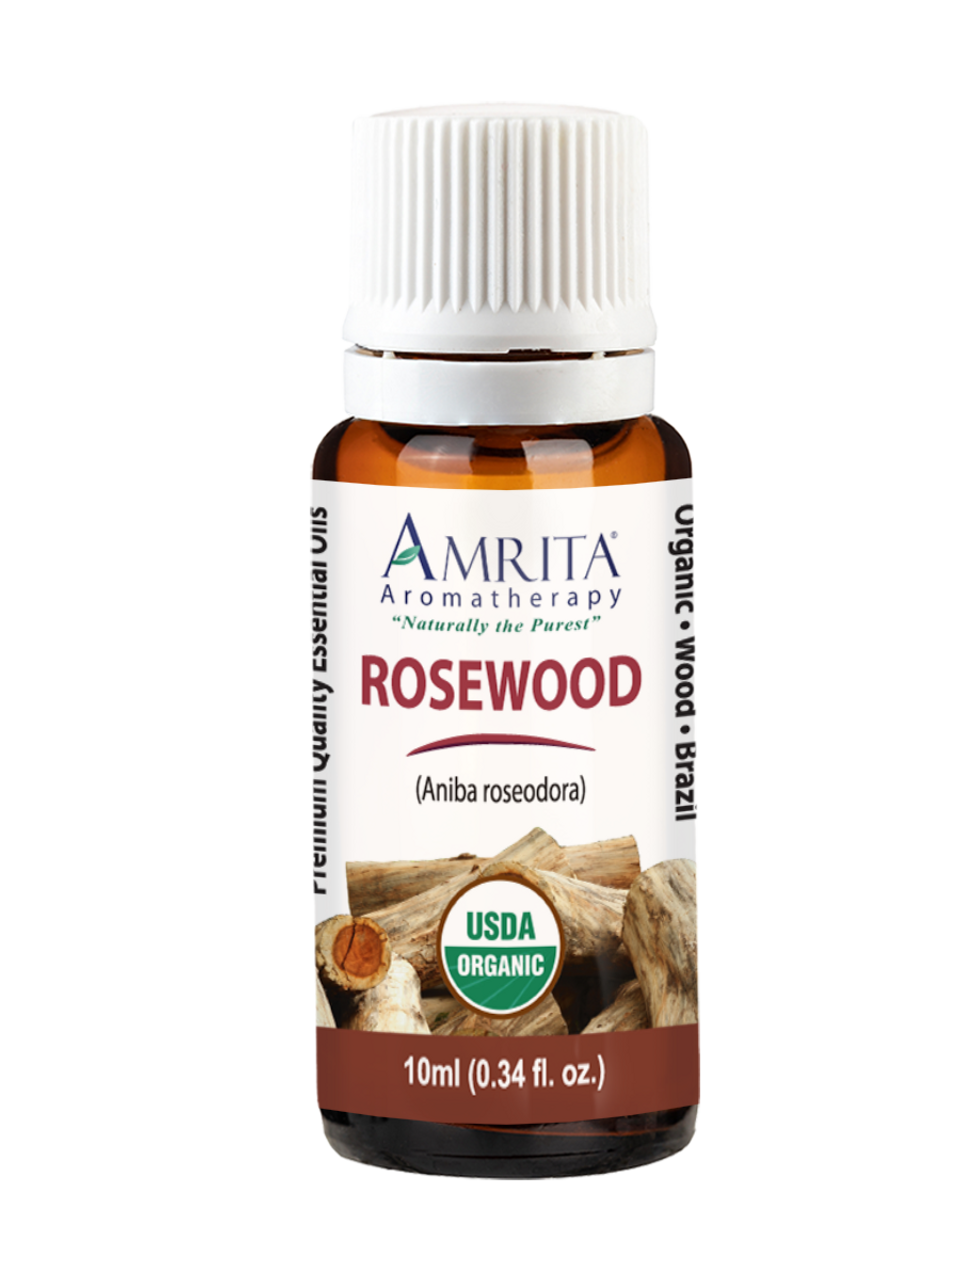 Bois de Rose essential oil from